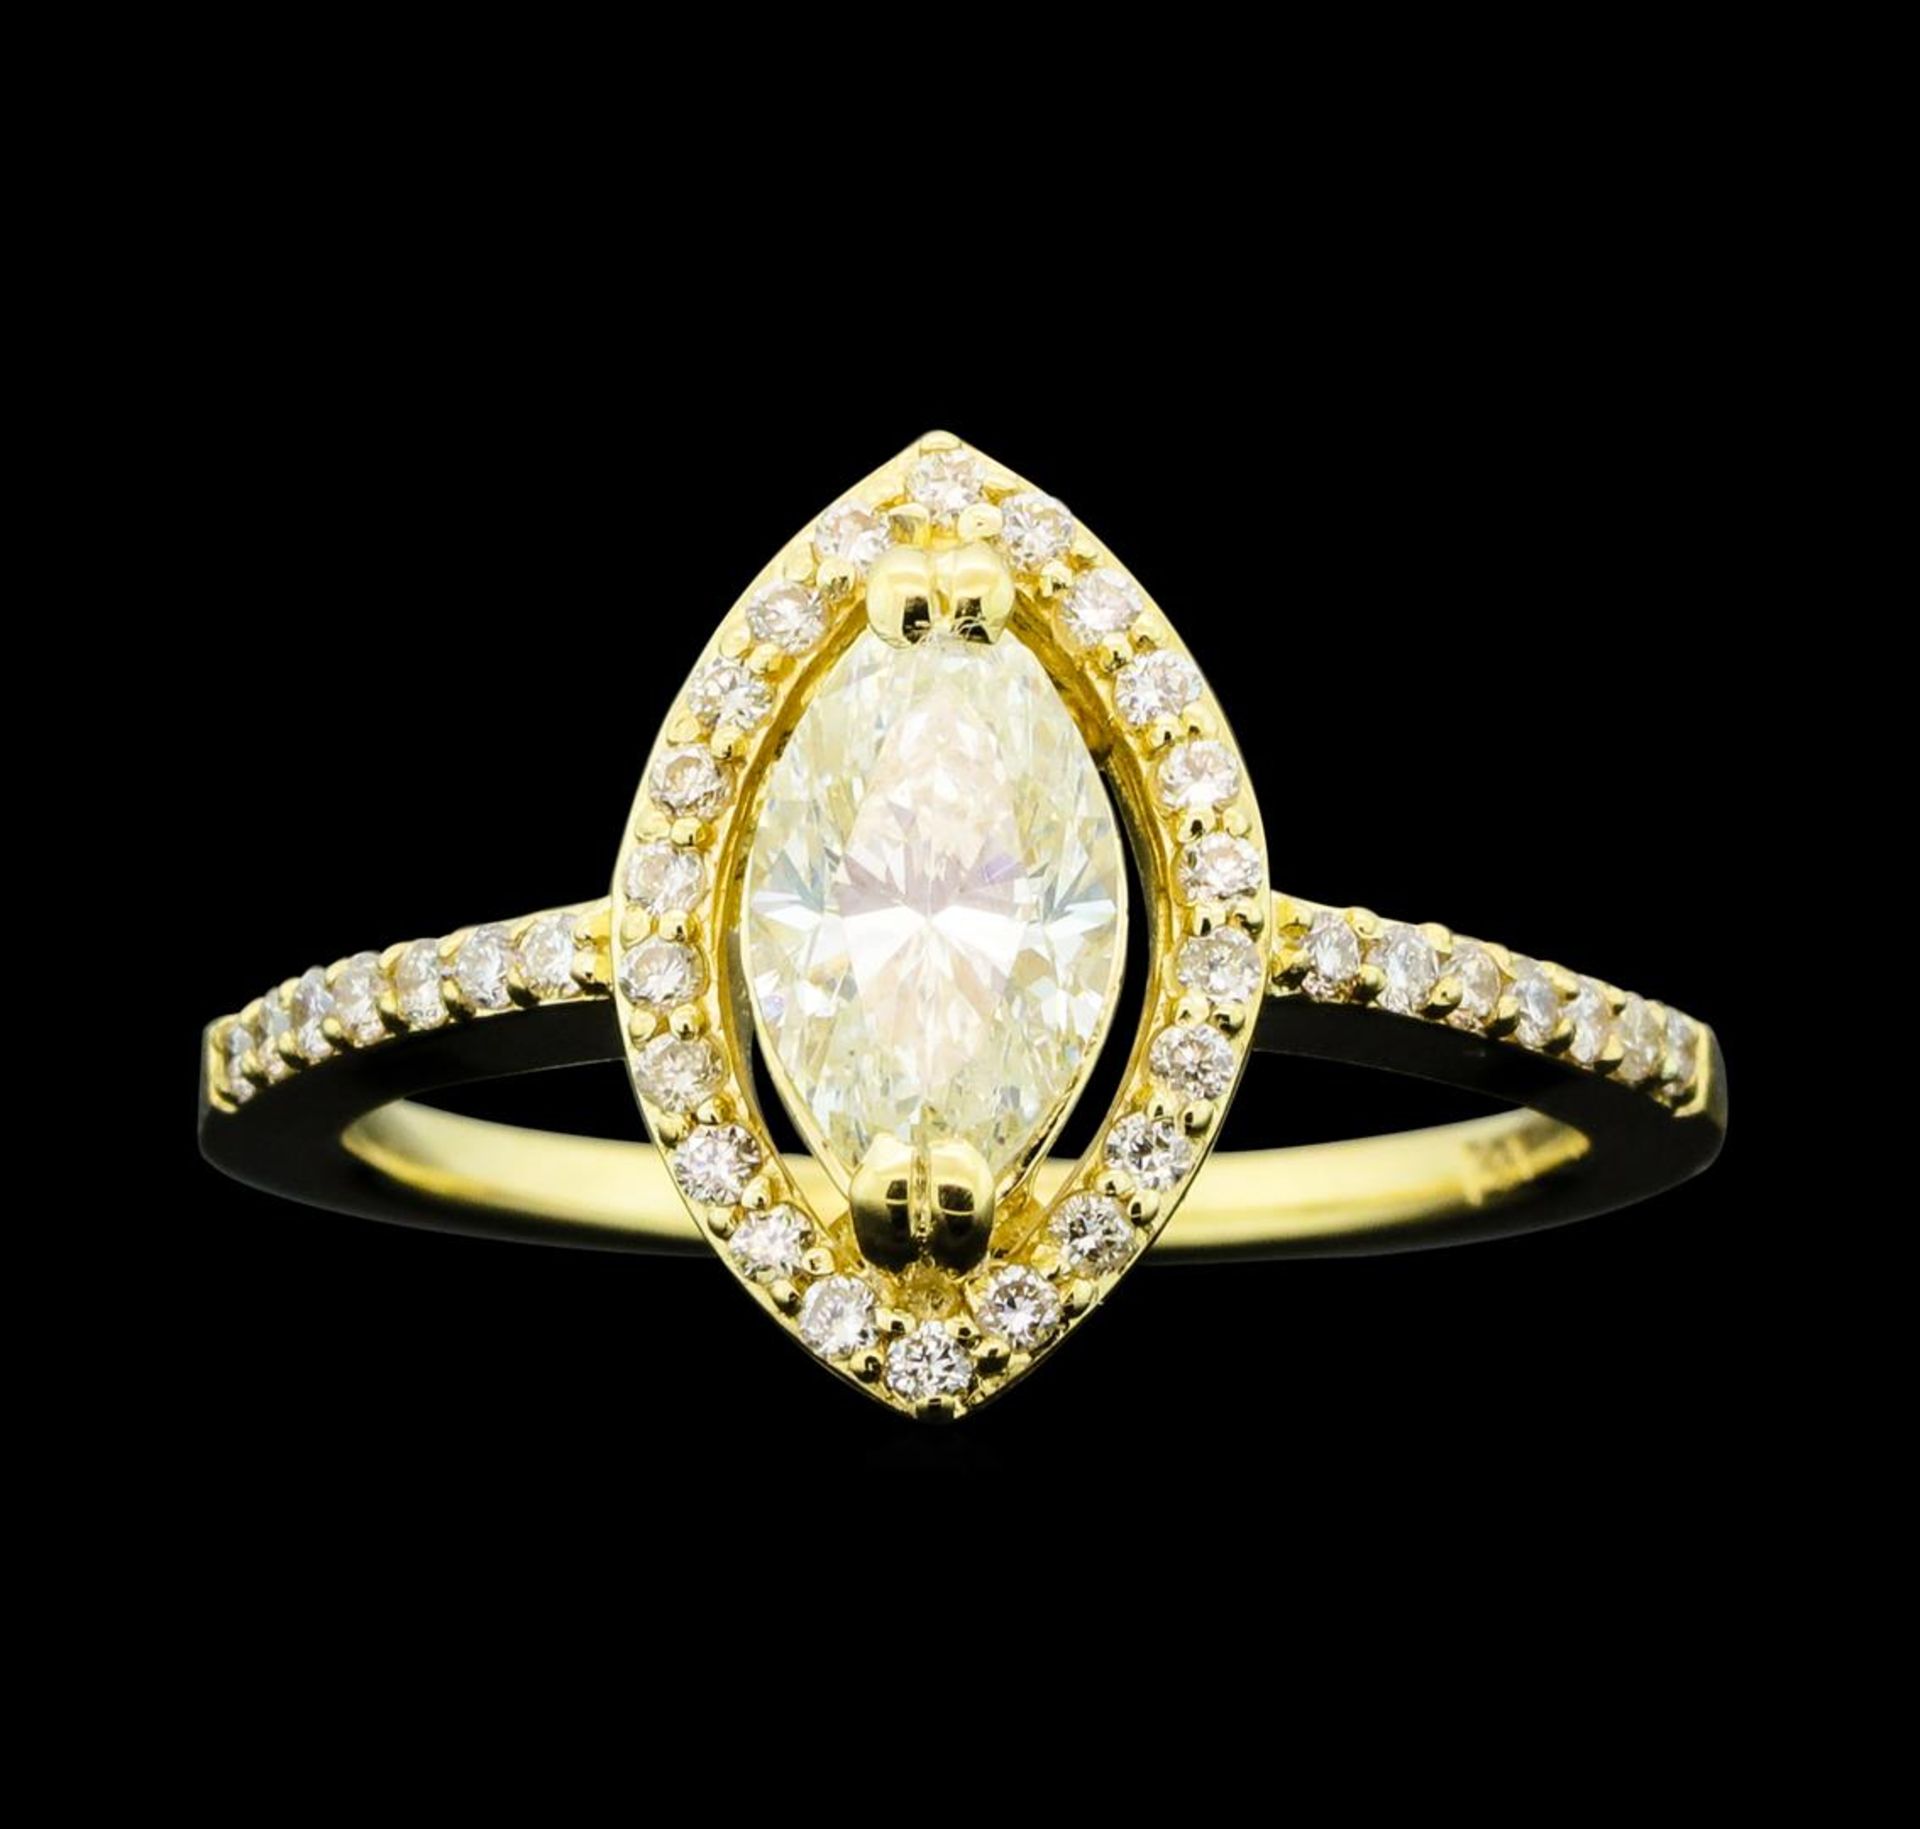 1.16 ctw Diamond Ring - 14KT Yellow Gold - Image 2 of 5